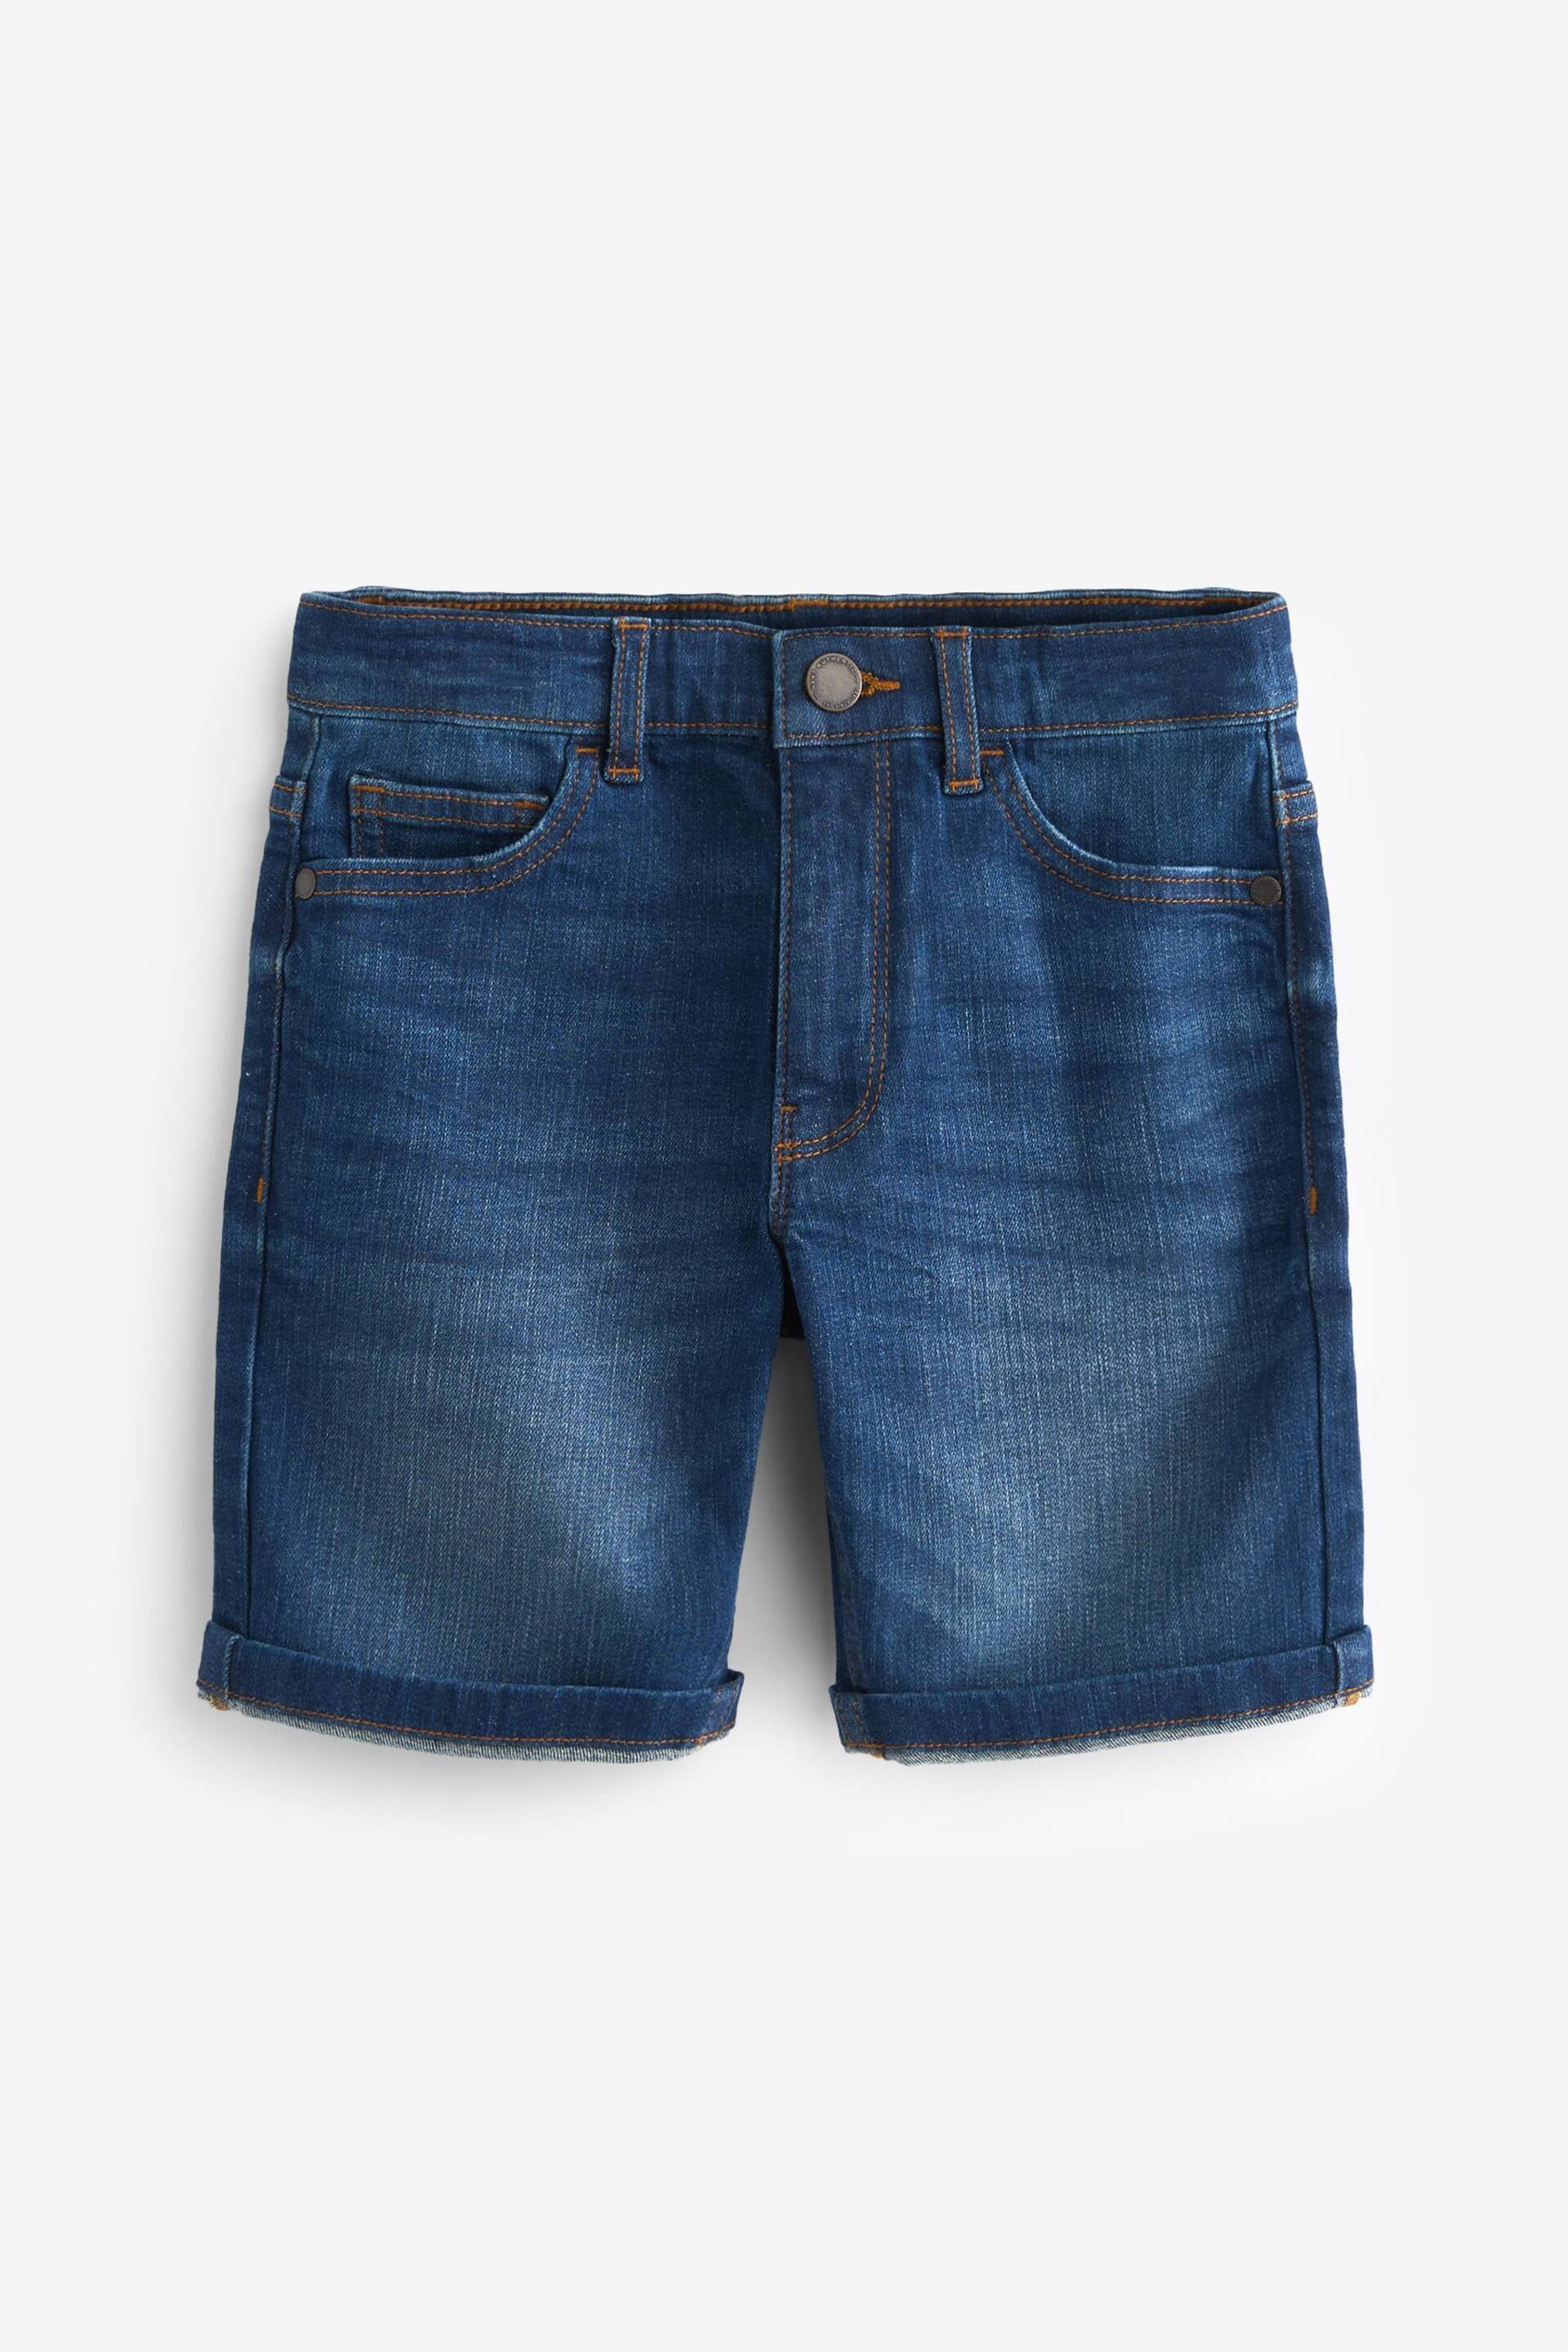 Blue Denim Shorts (12mths-16yrs) - Image 1 of 3